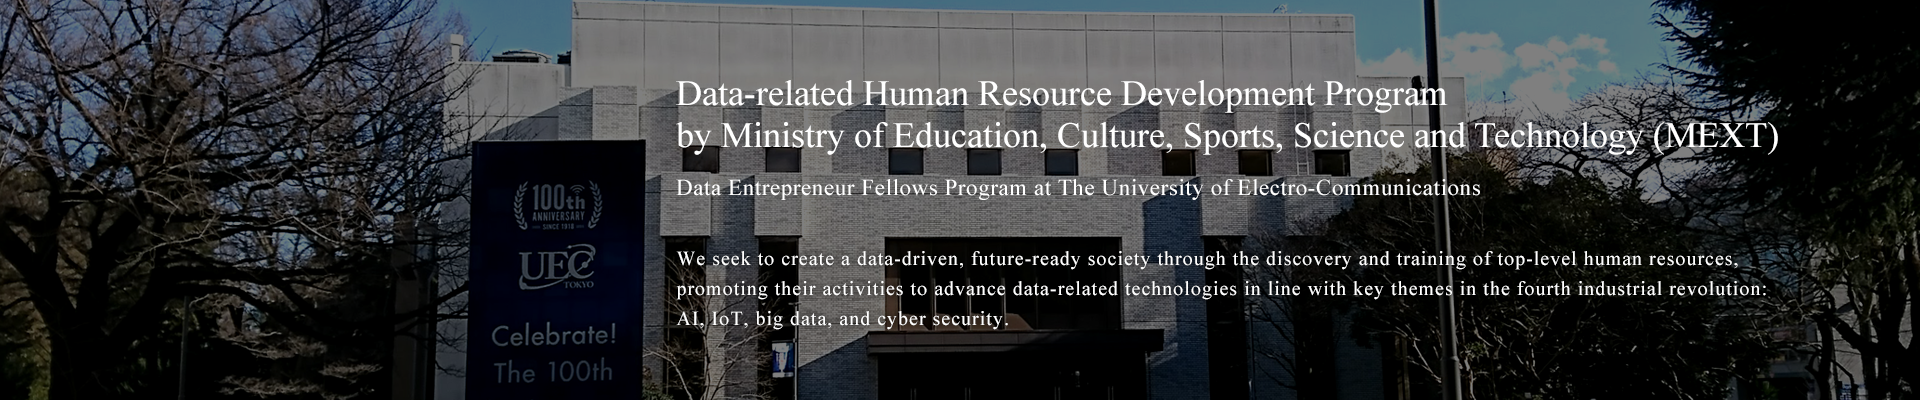 Data Entrepreneur Fellow Program at The University of Electro-Communications